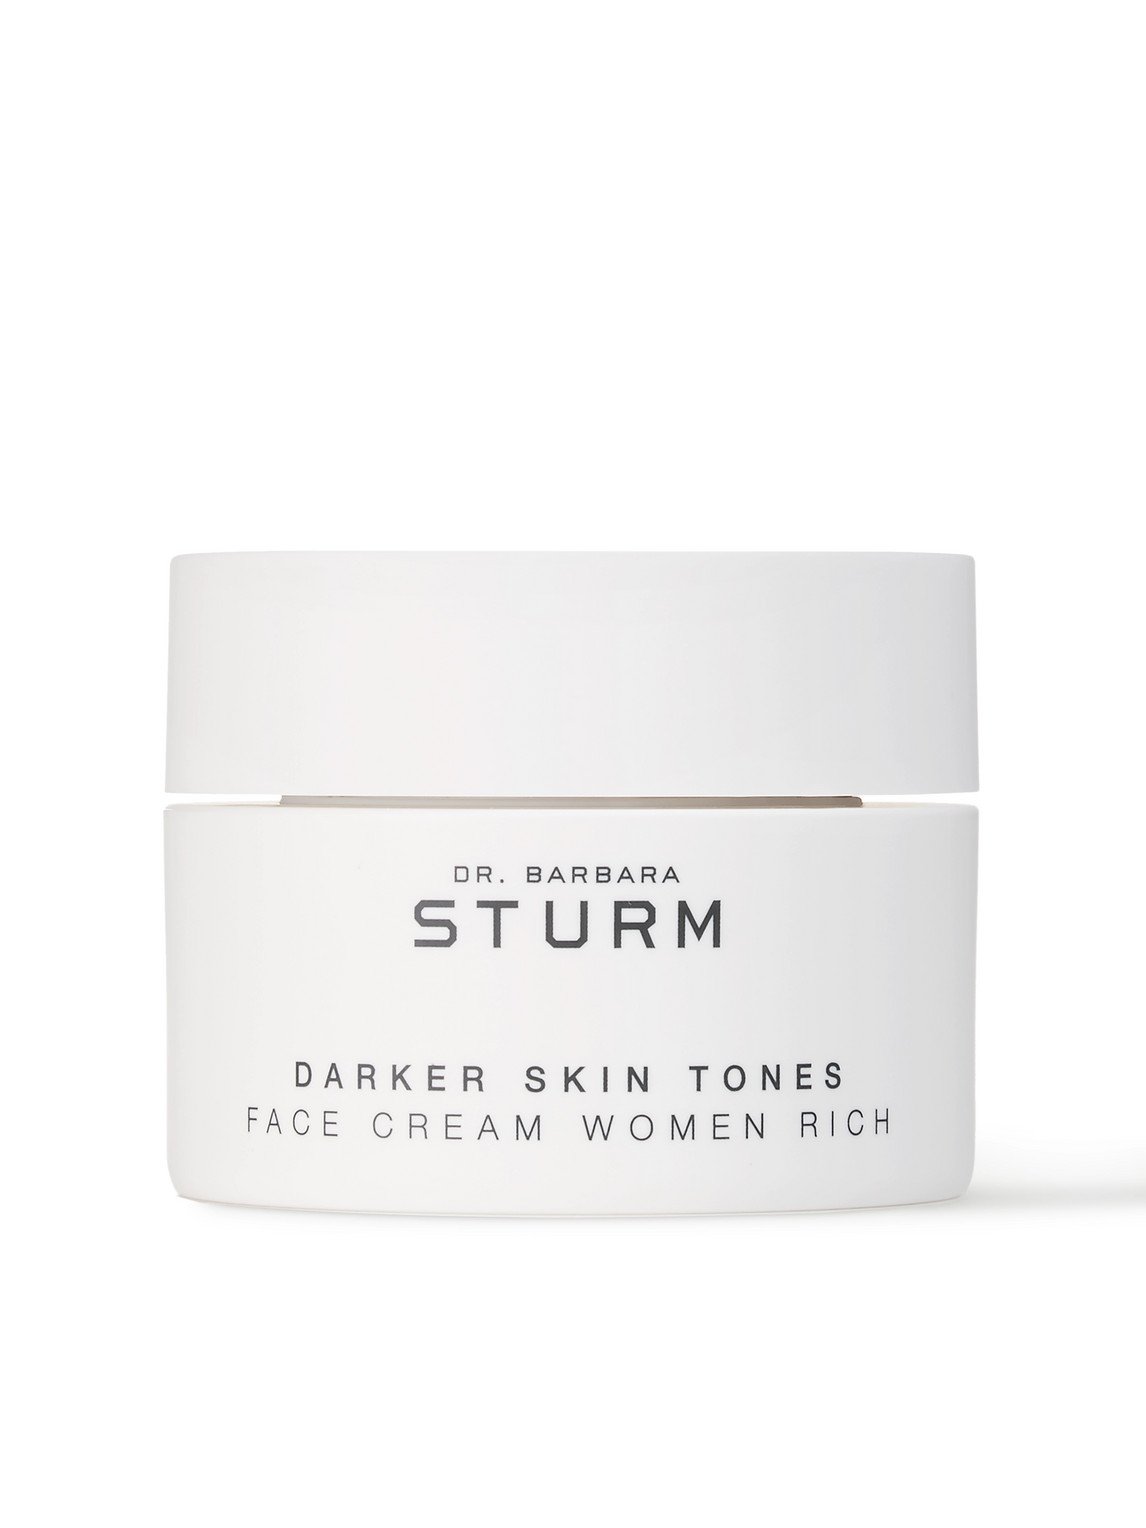 Dr Barbara Sturm Darker Skin Tones Face Cream Rich, 50ml In Colorless